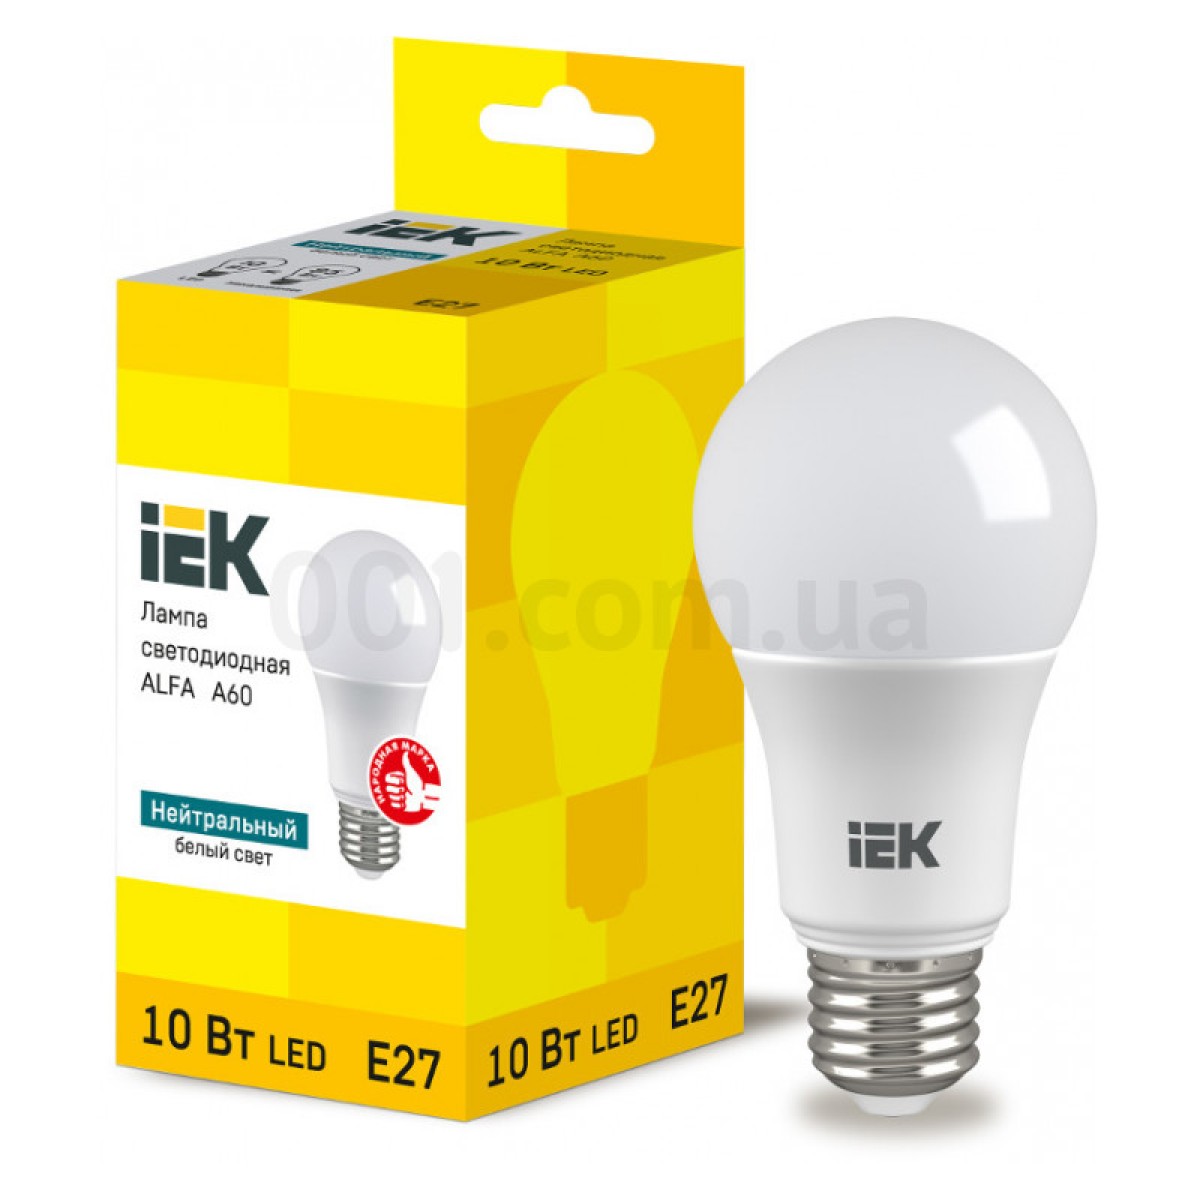 Світлодіодна лампа LED ALFA A60 (груша) 10 Вт 230В 4000К E27, IEK 256_256.jpg